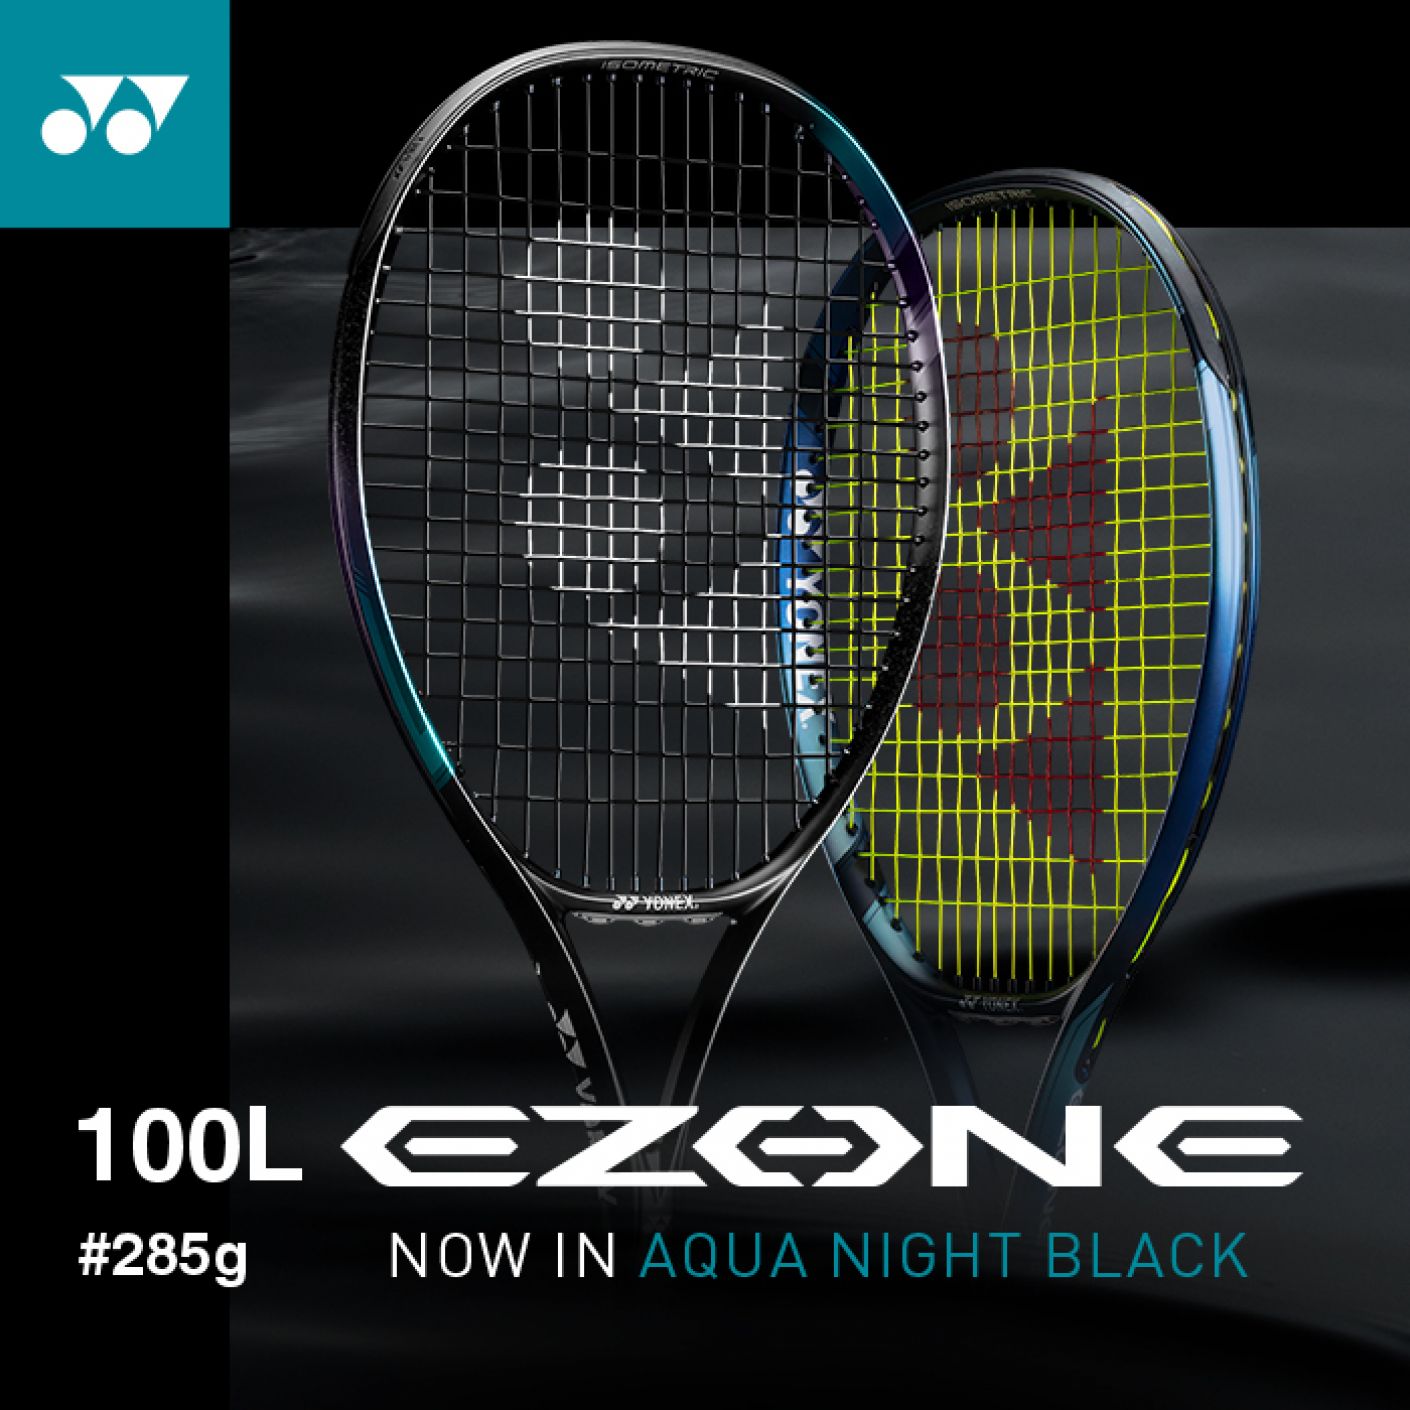 Yonex Ezone 100L/285g AQ Black